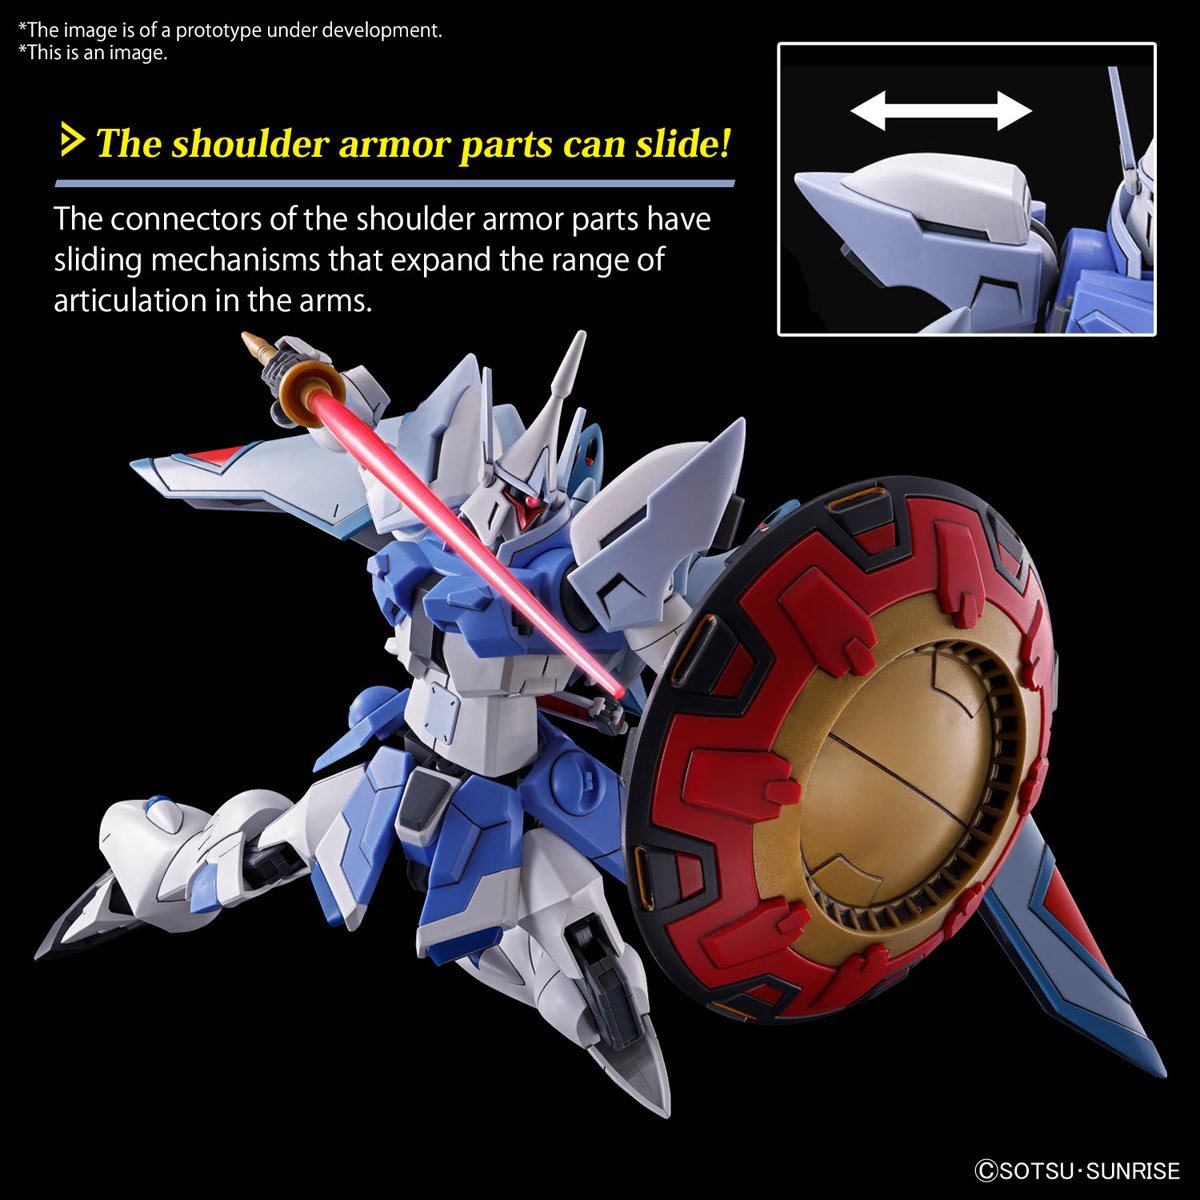 Bandai Hobby Gunpla High Grade Model Kit: Mobile Suit Gundam Seed Freedom - Gyan Strom Agnes Giebenrath Custom Escala 1/144 Kit De Plastico